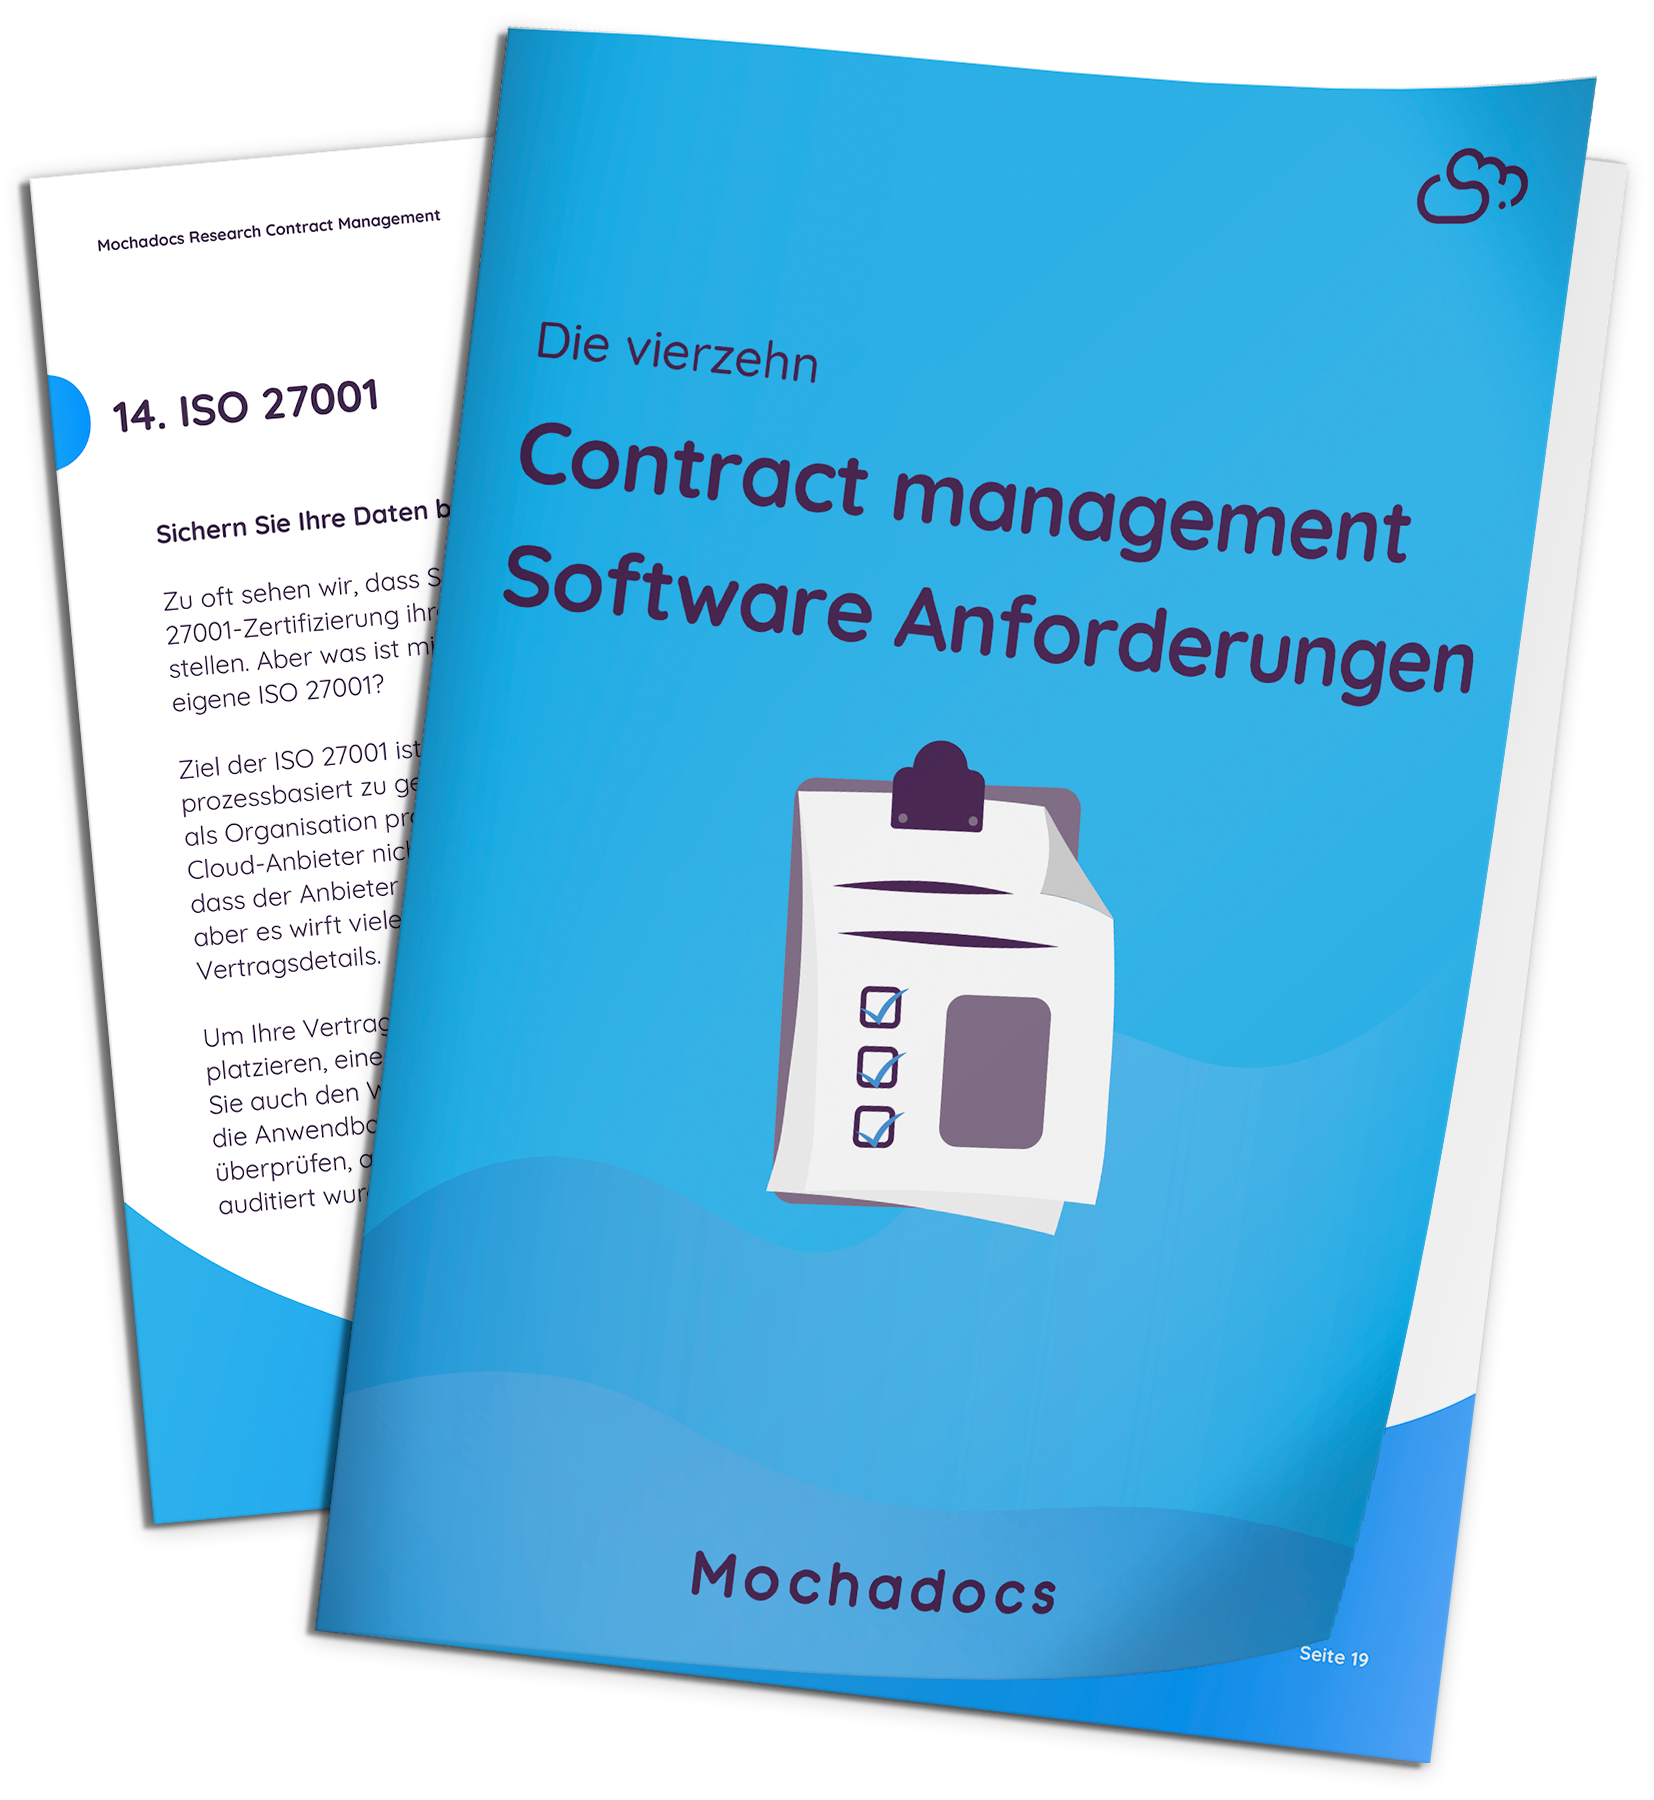 Mochadocs - Contract Management - eBook - Die vierzehn Contract Management Software Anforderungen